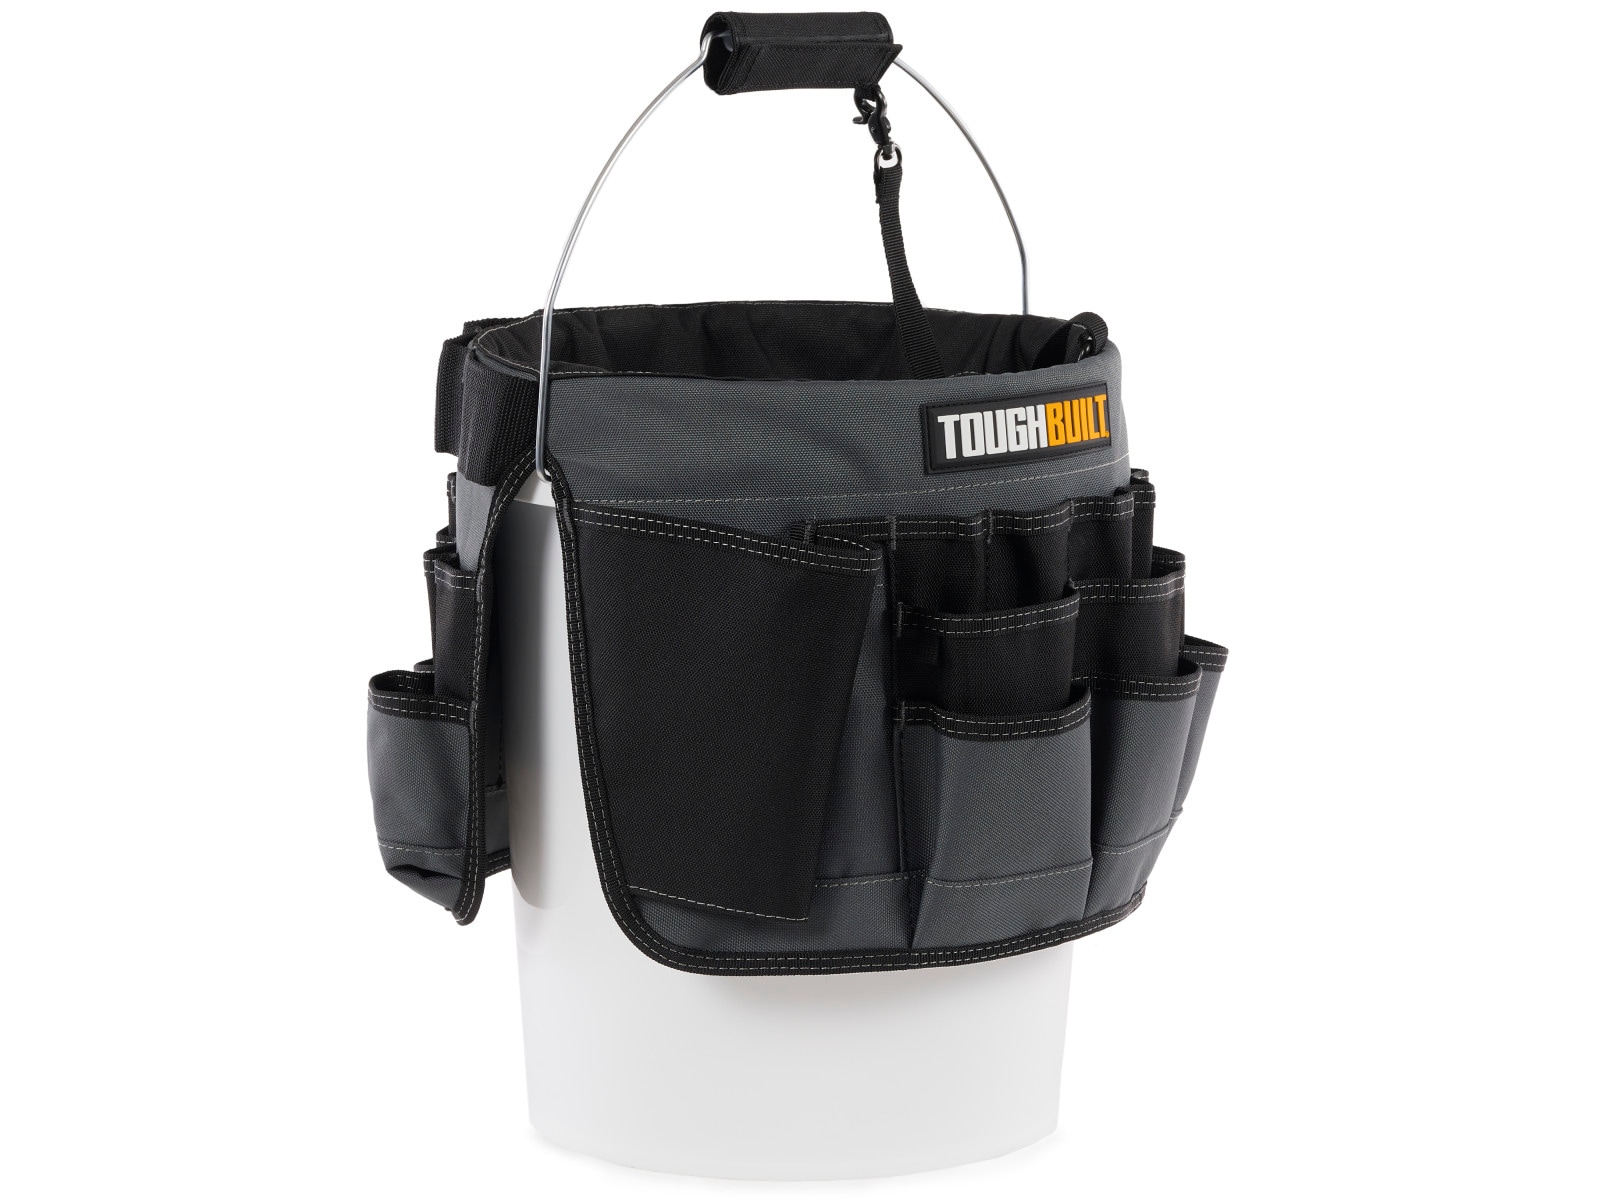 WELKINLAND 5 gallon bucket tool organizer, 5 gallon bucket holder, 5 gallon  bucket liner, Bucket tool organizer, Tool bucket, Bucket tool